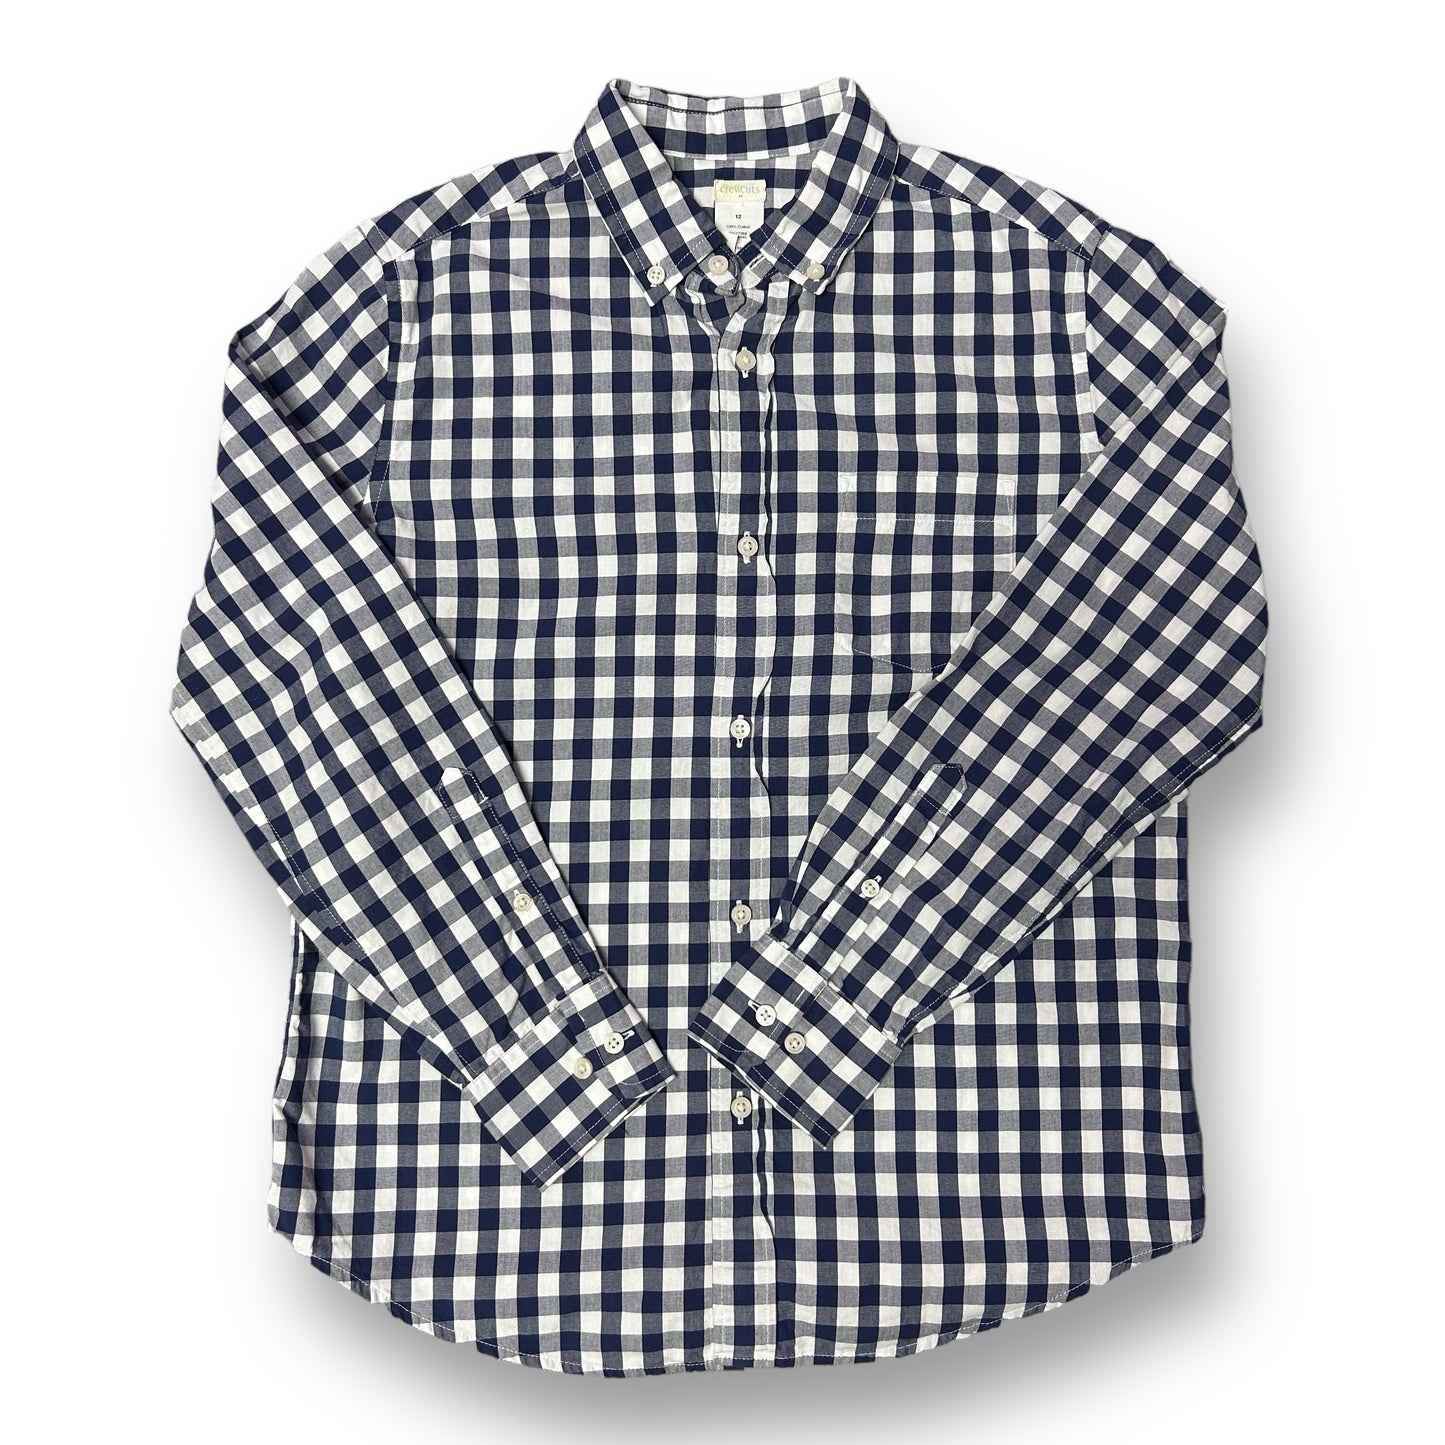 Boys Crewcuts Size 12 Blue/White Checkered Long Sleeve Button Down Shirt